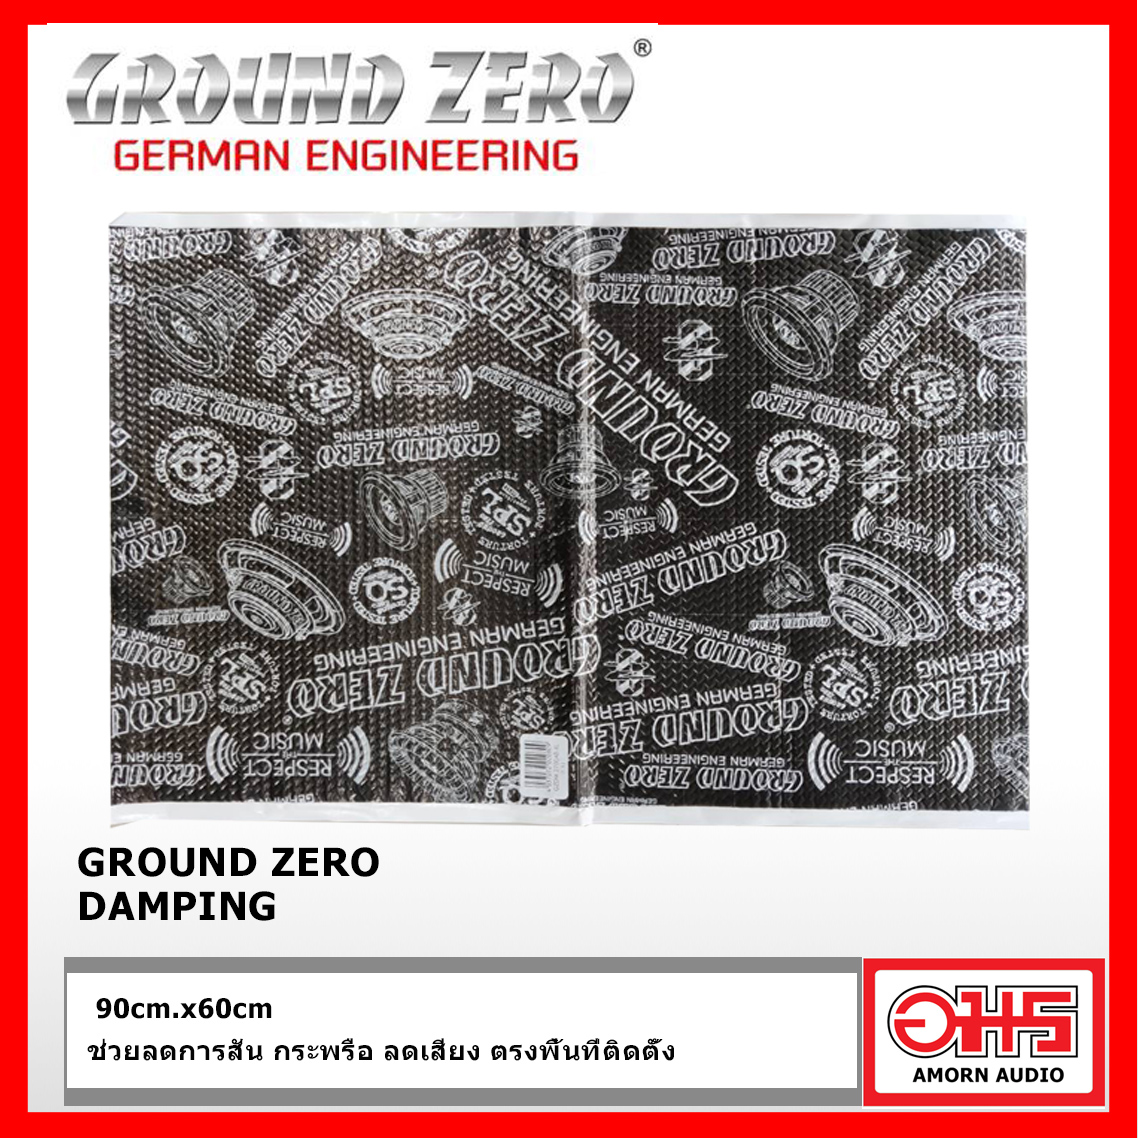 GROUND ZERO DAMPING แผ่นแดมป์ 1แผ่น ขนาด 90cm.x60cm AMORNAUDIO อมรออดิโอ